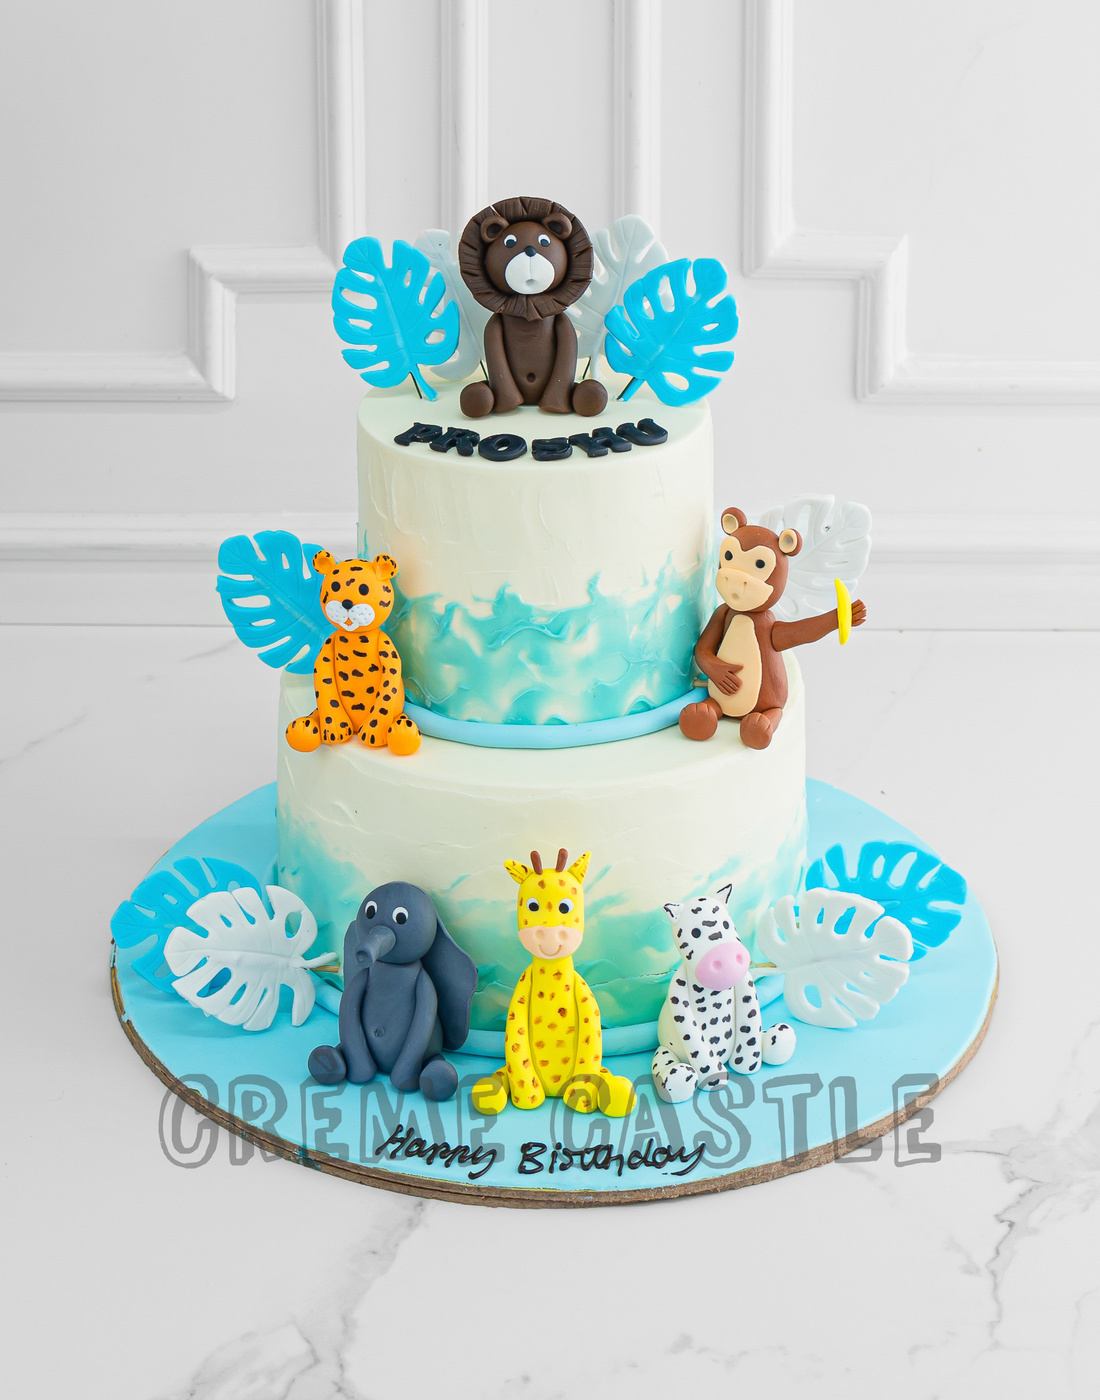 blue theme cake, Food & Drinks, Homemade Bakes on Carousell